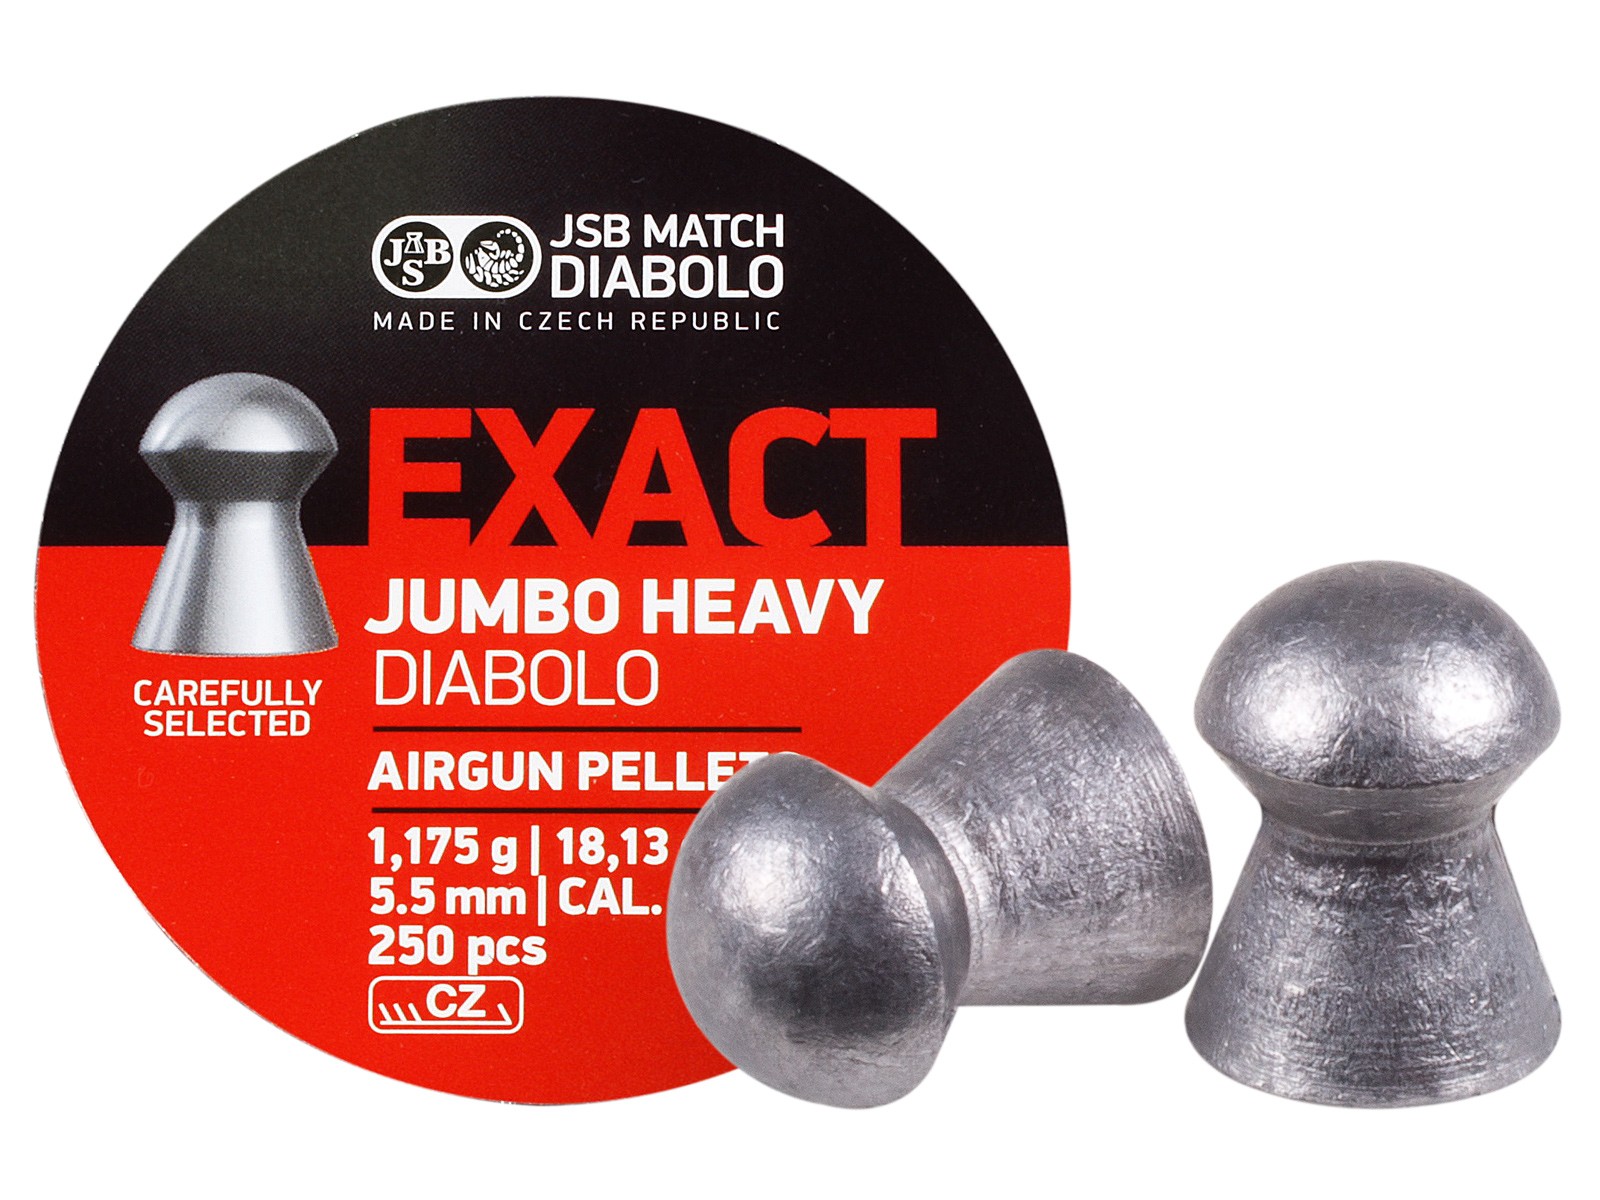 JSB Match Diabolo Exact Jumbo Heavy .22 Cal, 18.13 Grains, Domed, 250ct